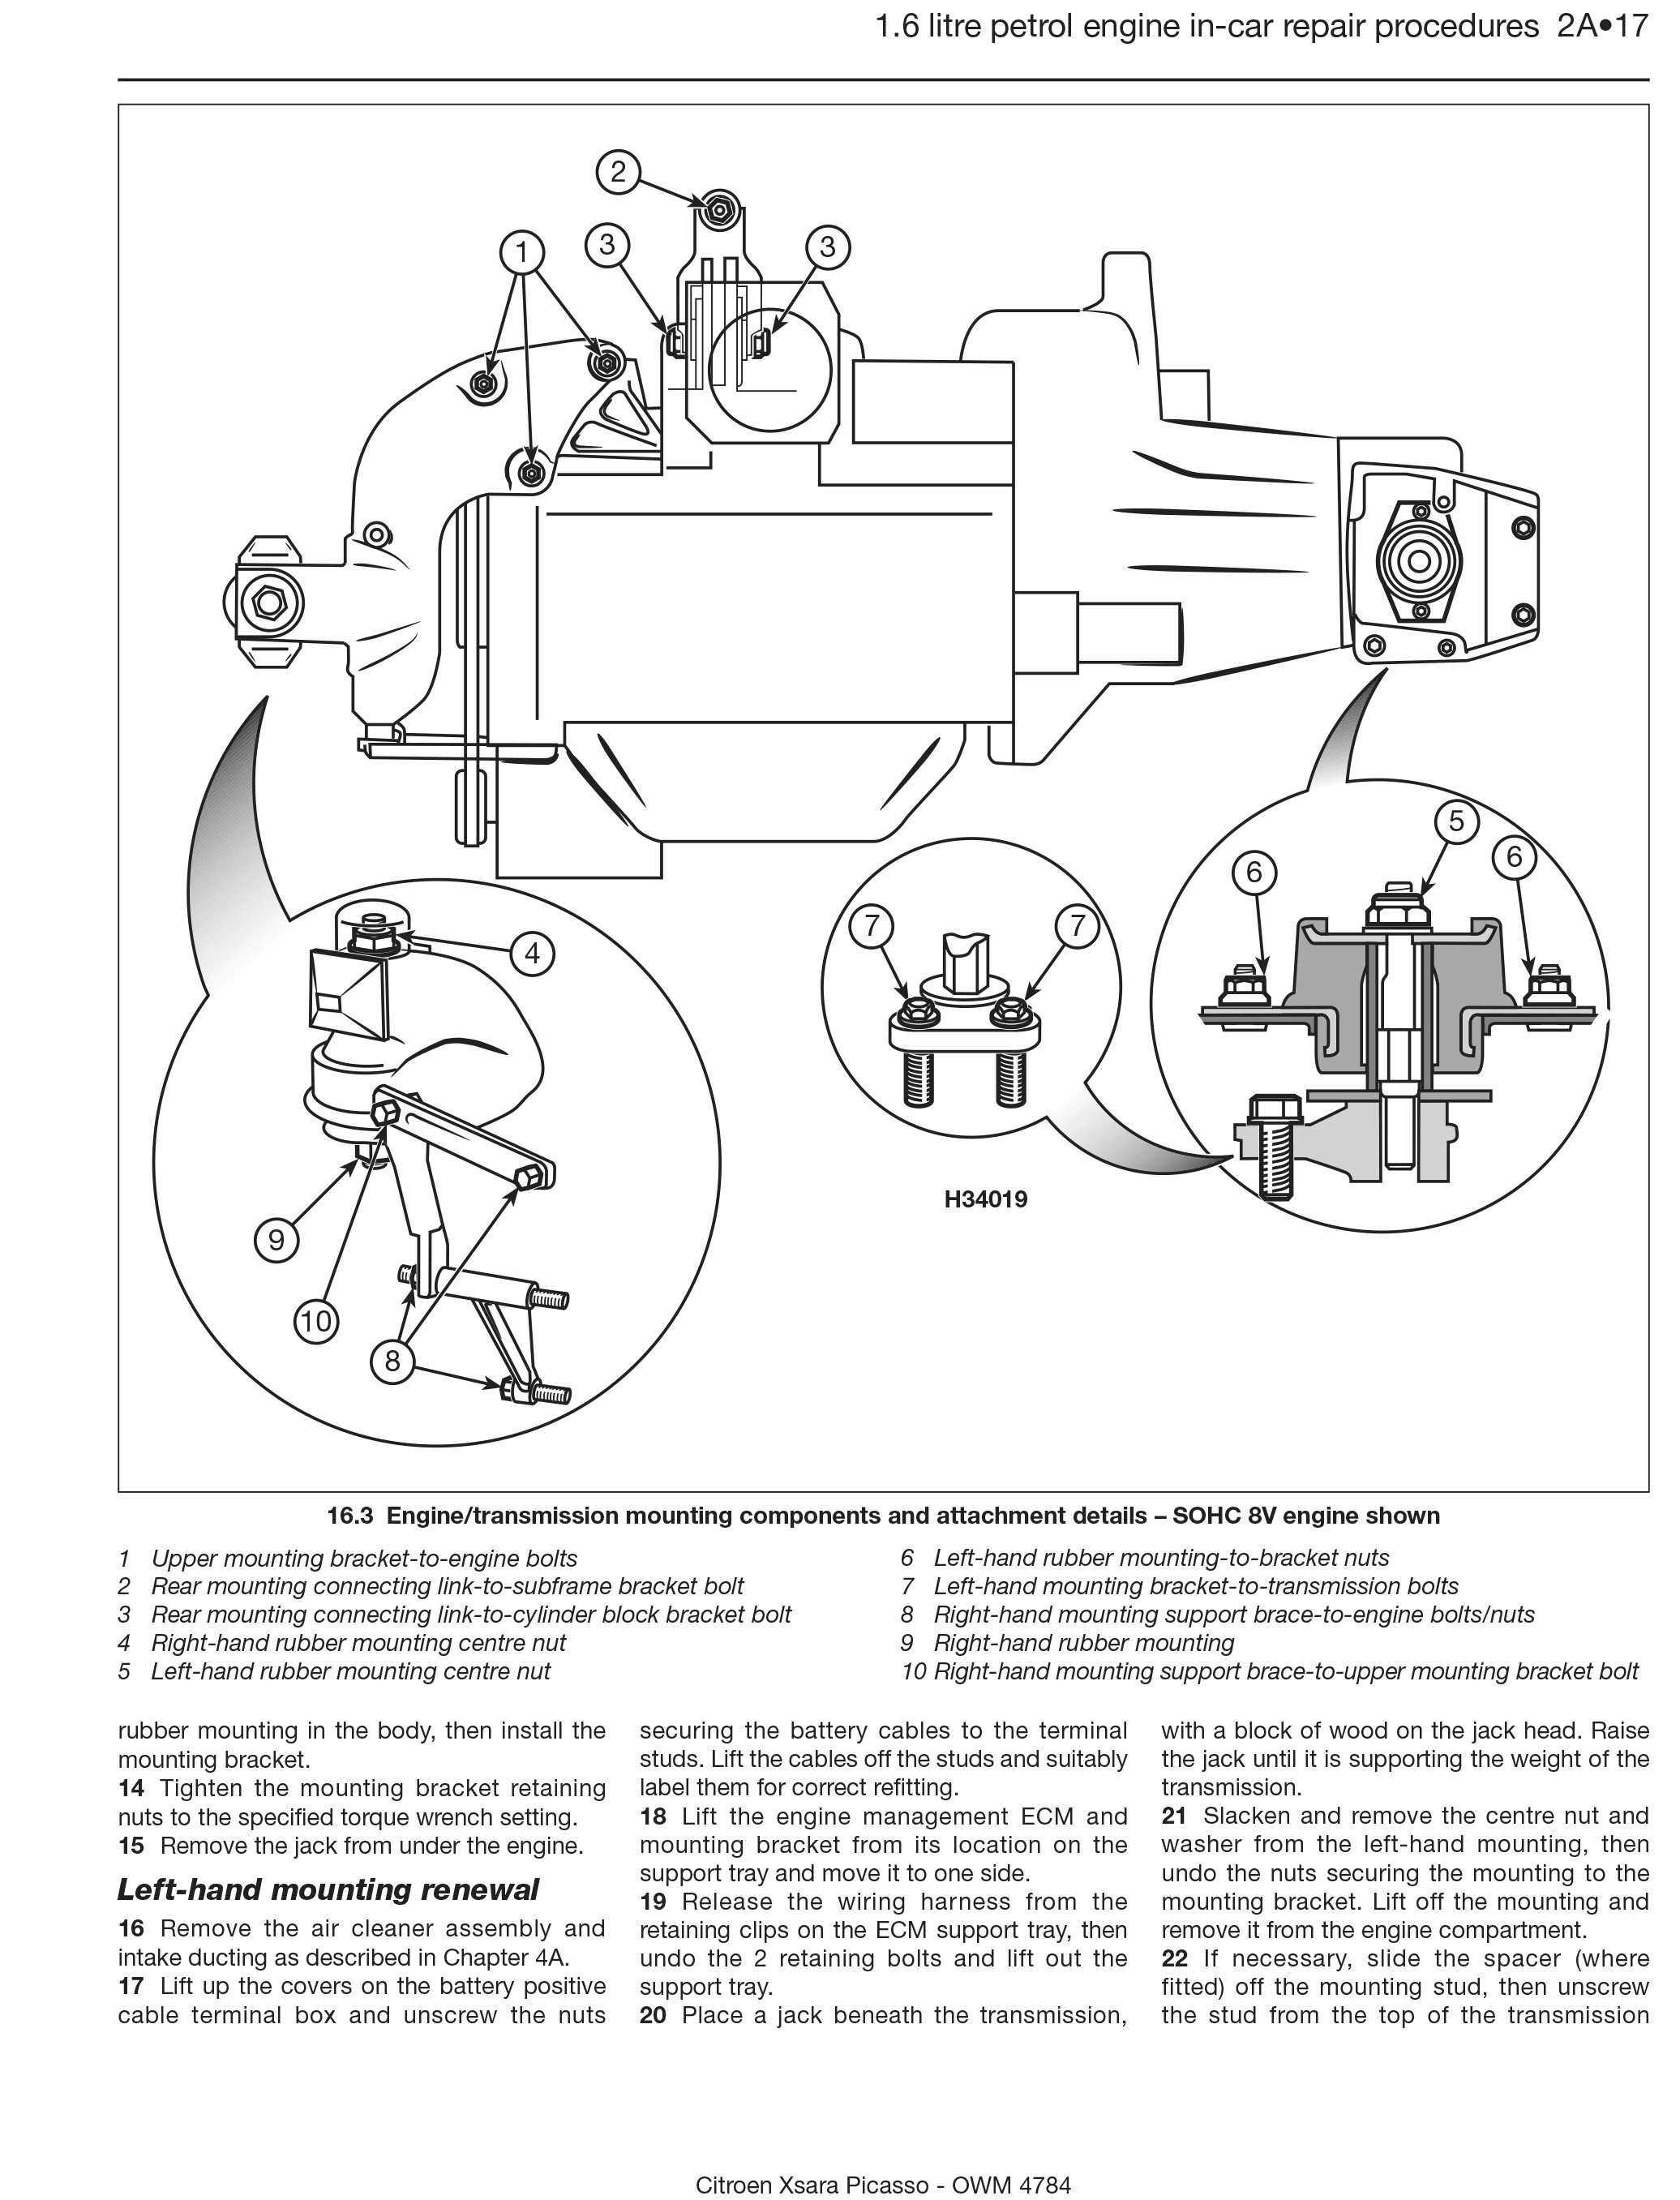 Citroen Picasso Engine Diagram A8d Citroen Xsara 2 0 Hdi 2003 Manual Of Citroen Picasso Engine Diagram